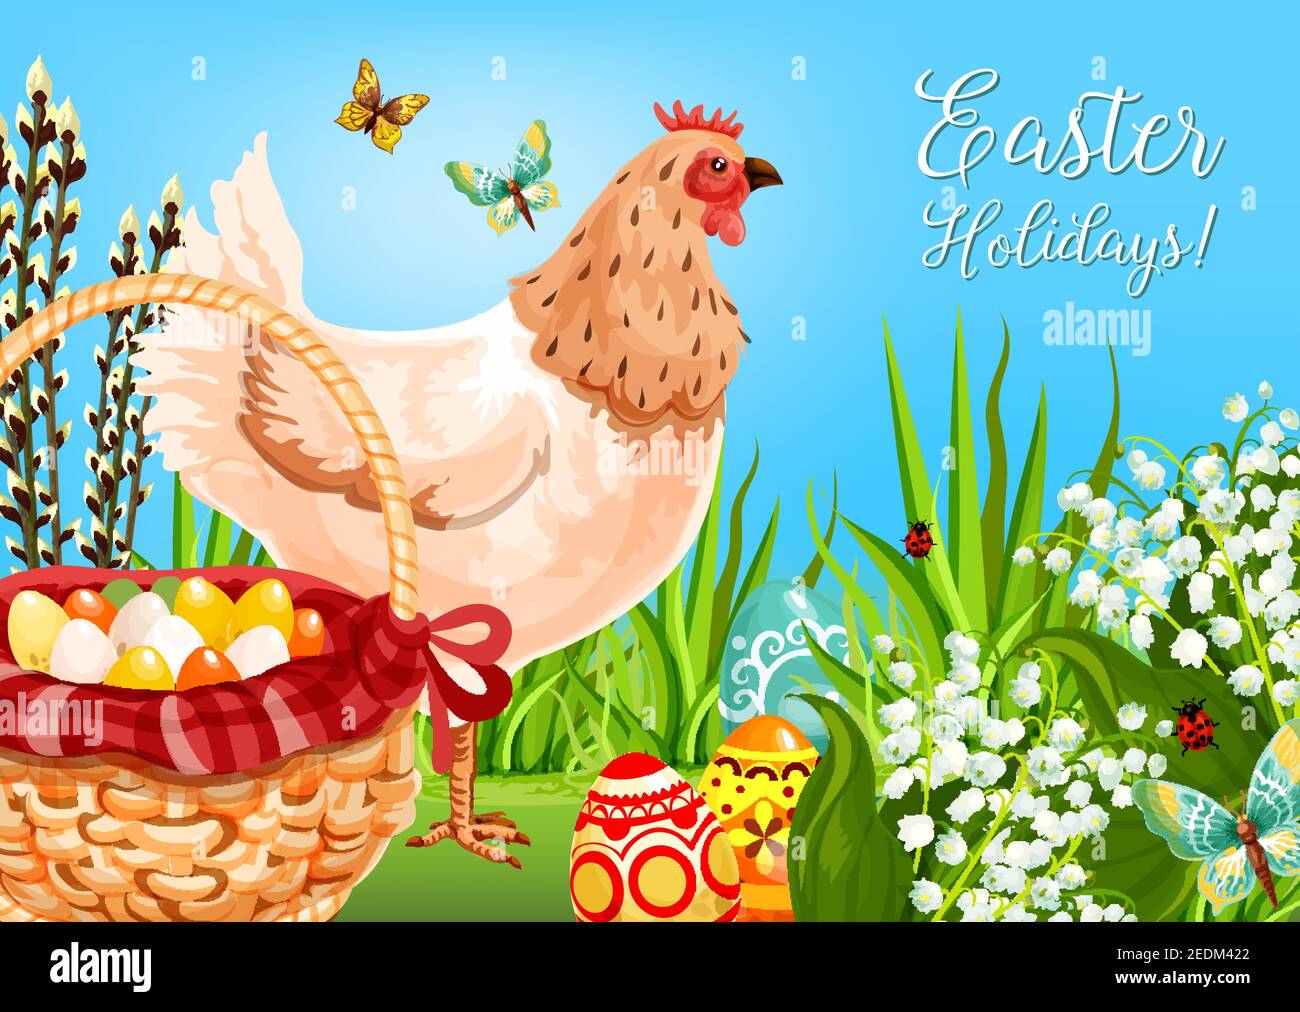 Pollo de Pascua con huevos tarjeta de felicitación. Cesta de caza de huevos de Pascua sobre hierba verde con huevos decorados, pollo, flores de lirio, ramas de sauce y mosca Ilustración del Vector